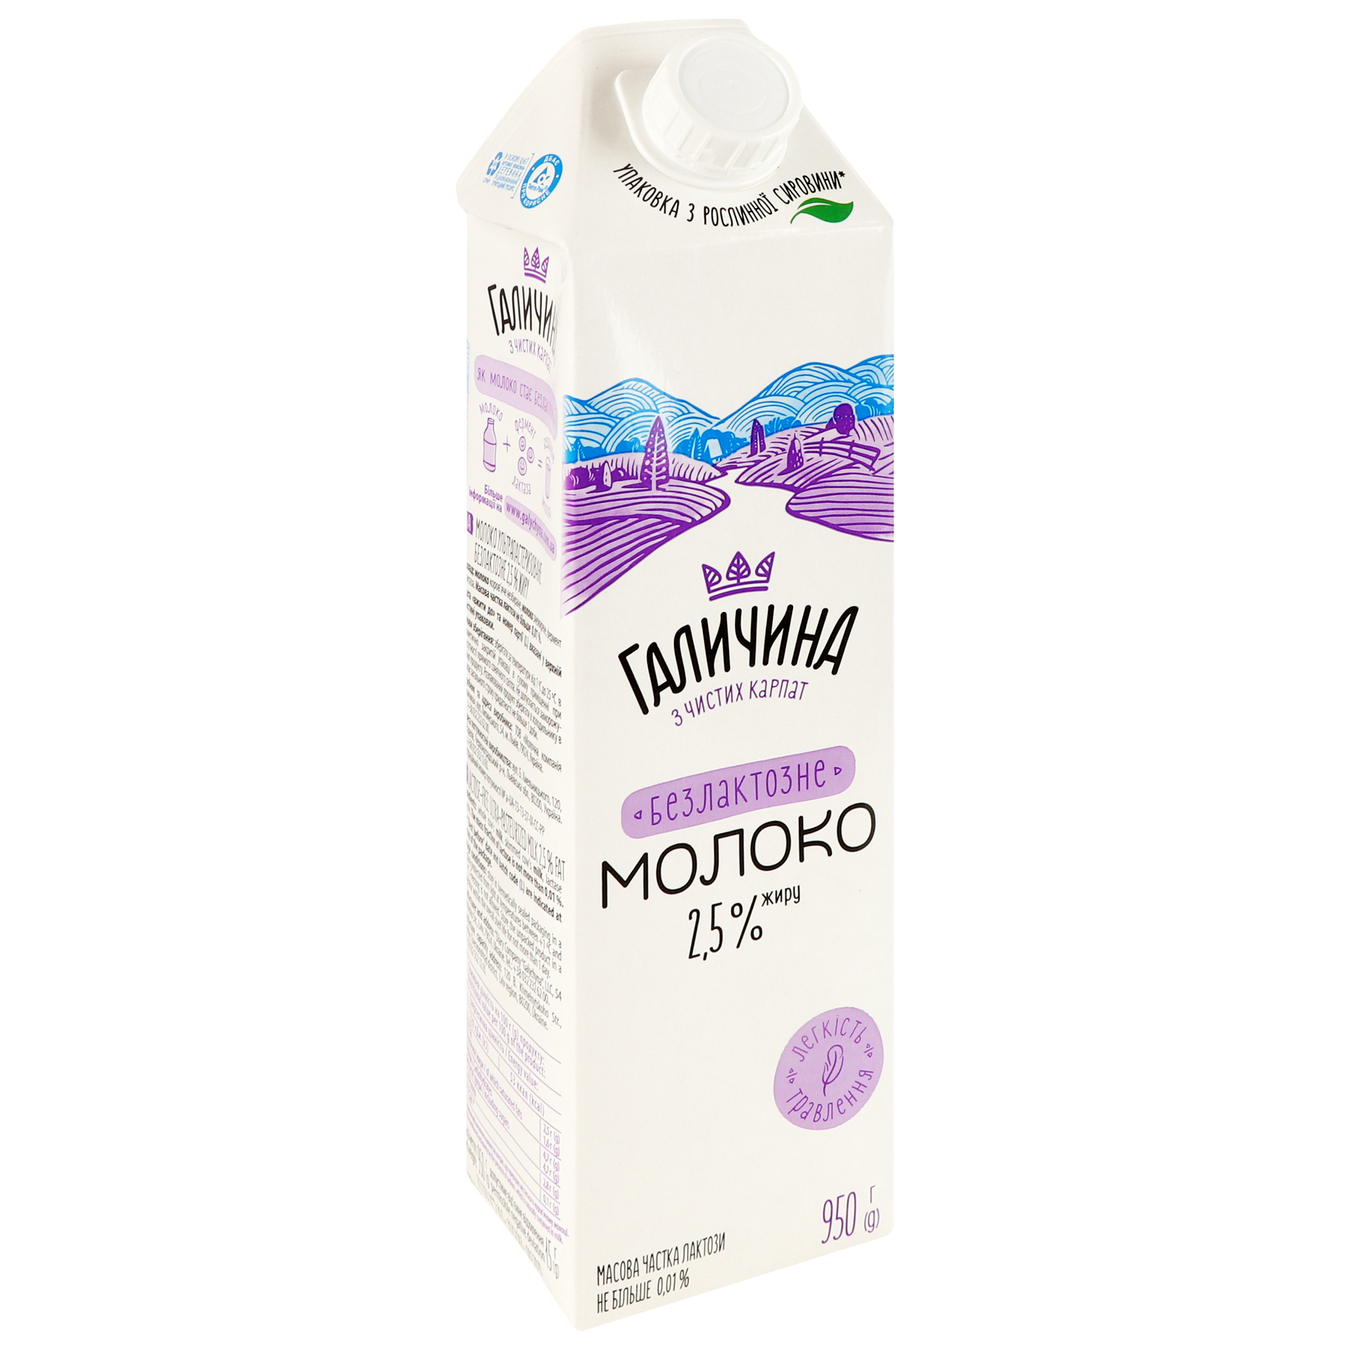 Milk Galichina Lactose-free Ultrapasteurized 2,5% 950g 5